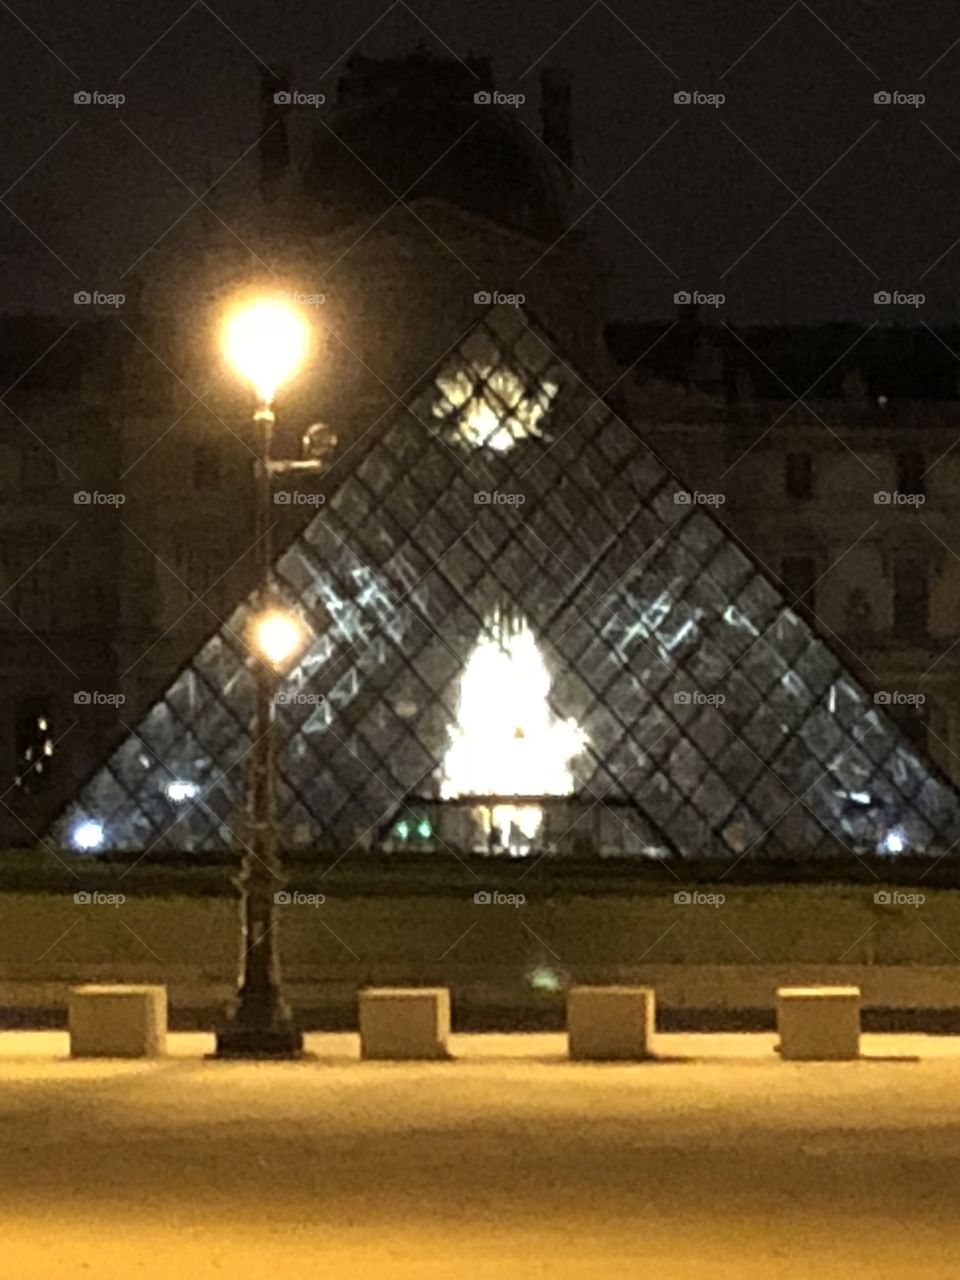 Pyramid louvres paris France 